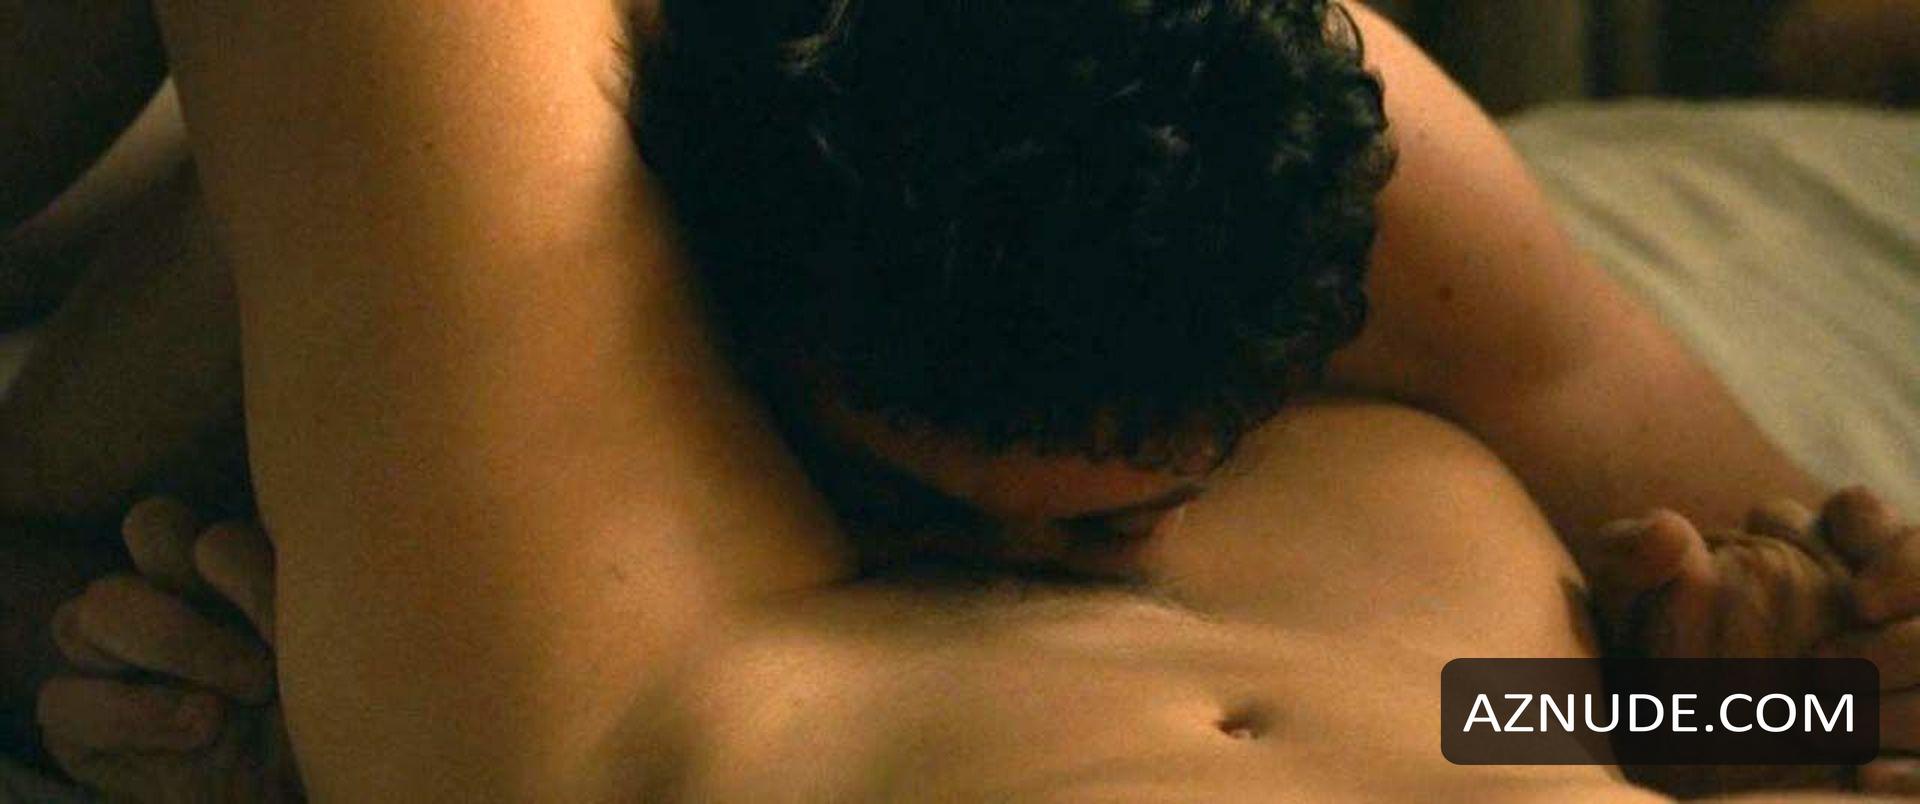 Virginie Efira Nude Sex Scene In The Movie Un Amour Impossible Aznude